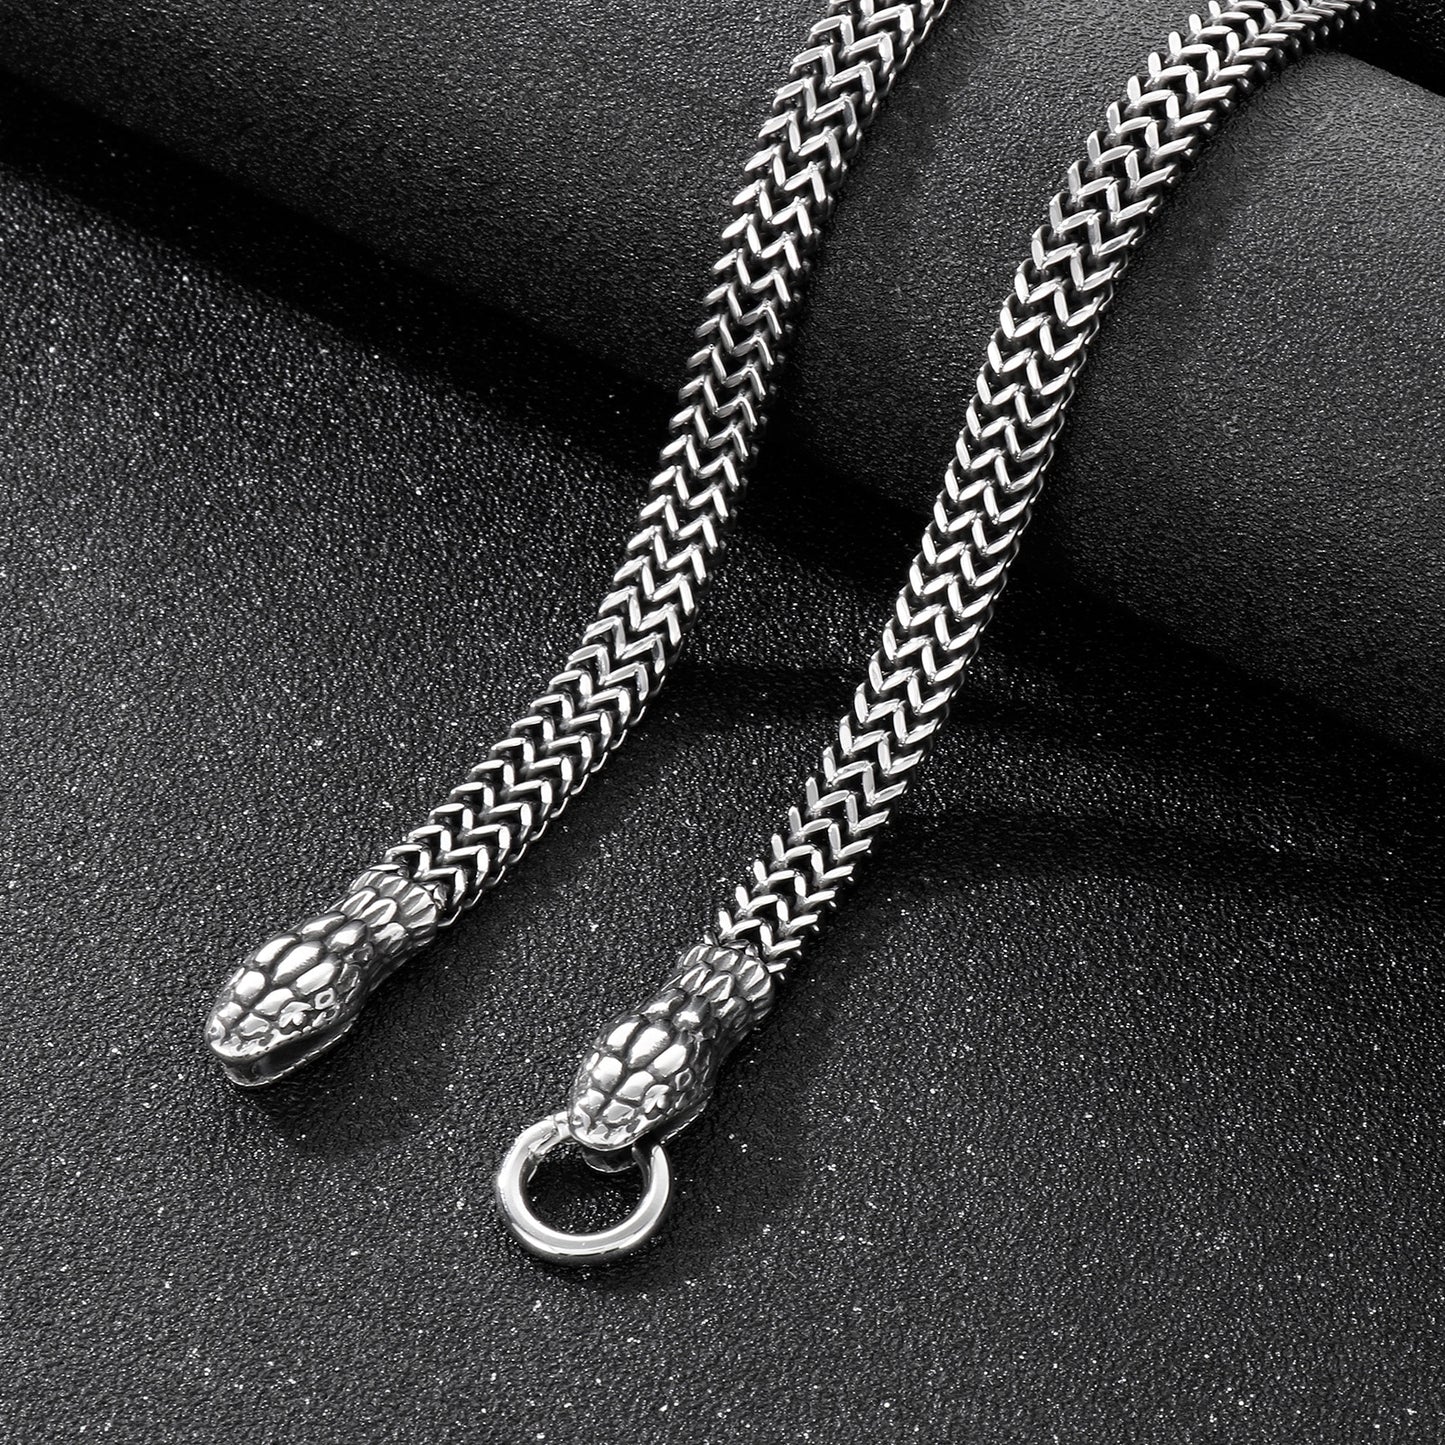 Dual Serpent Super Heavy Chain Necklace